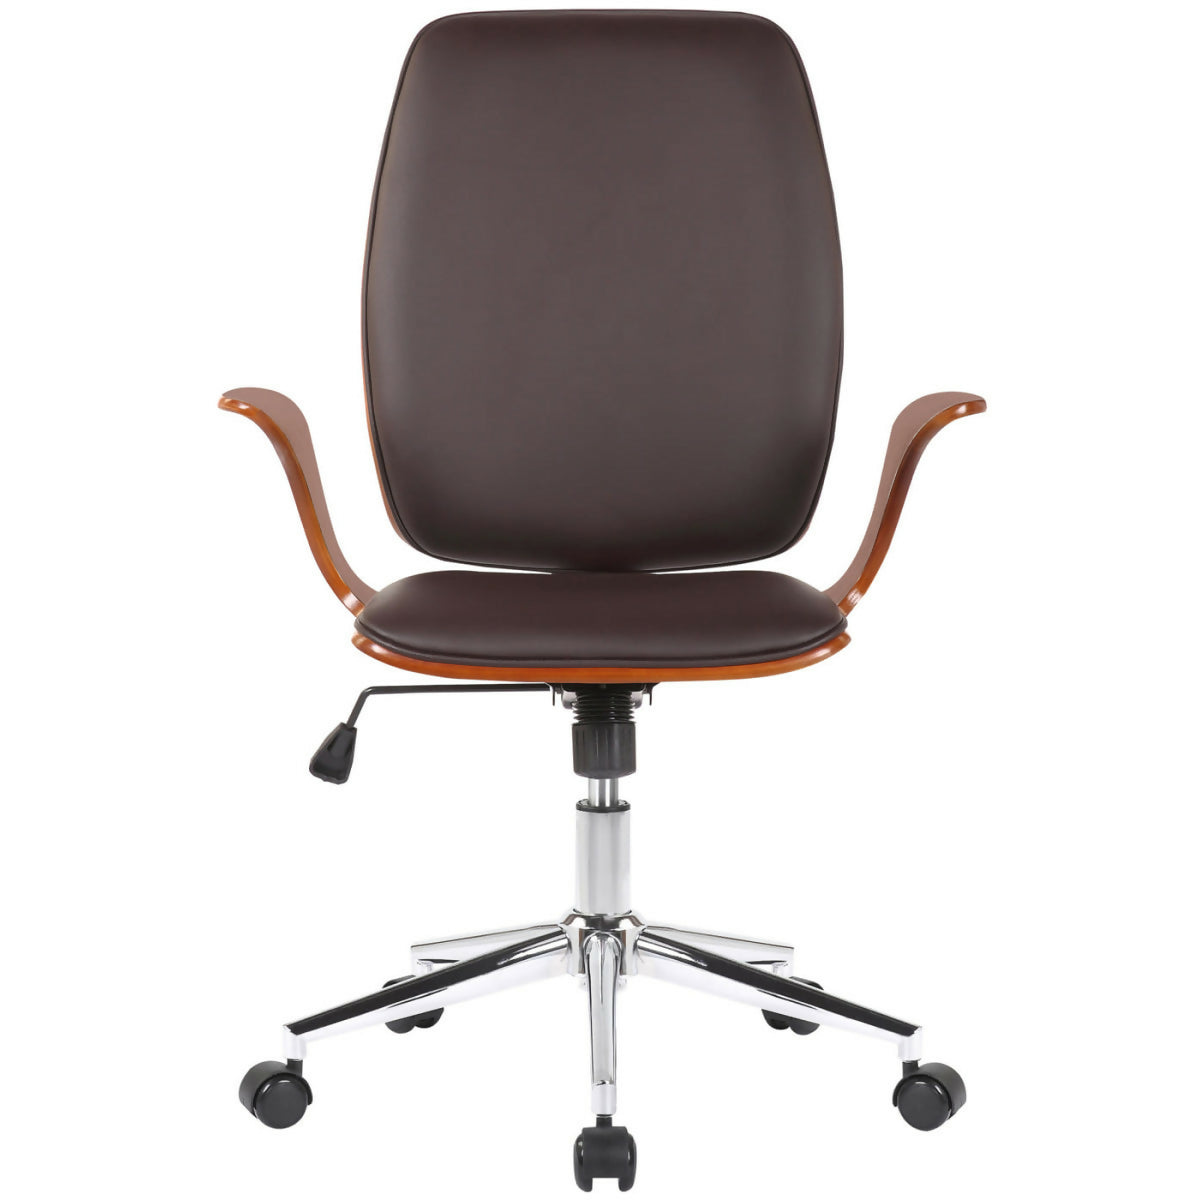 Burbank office chair - Walnut - Brown